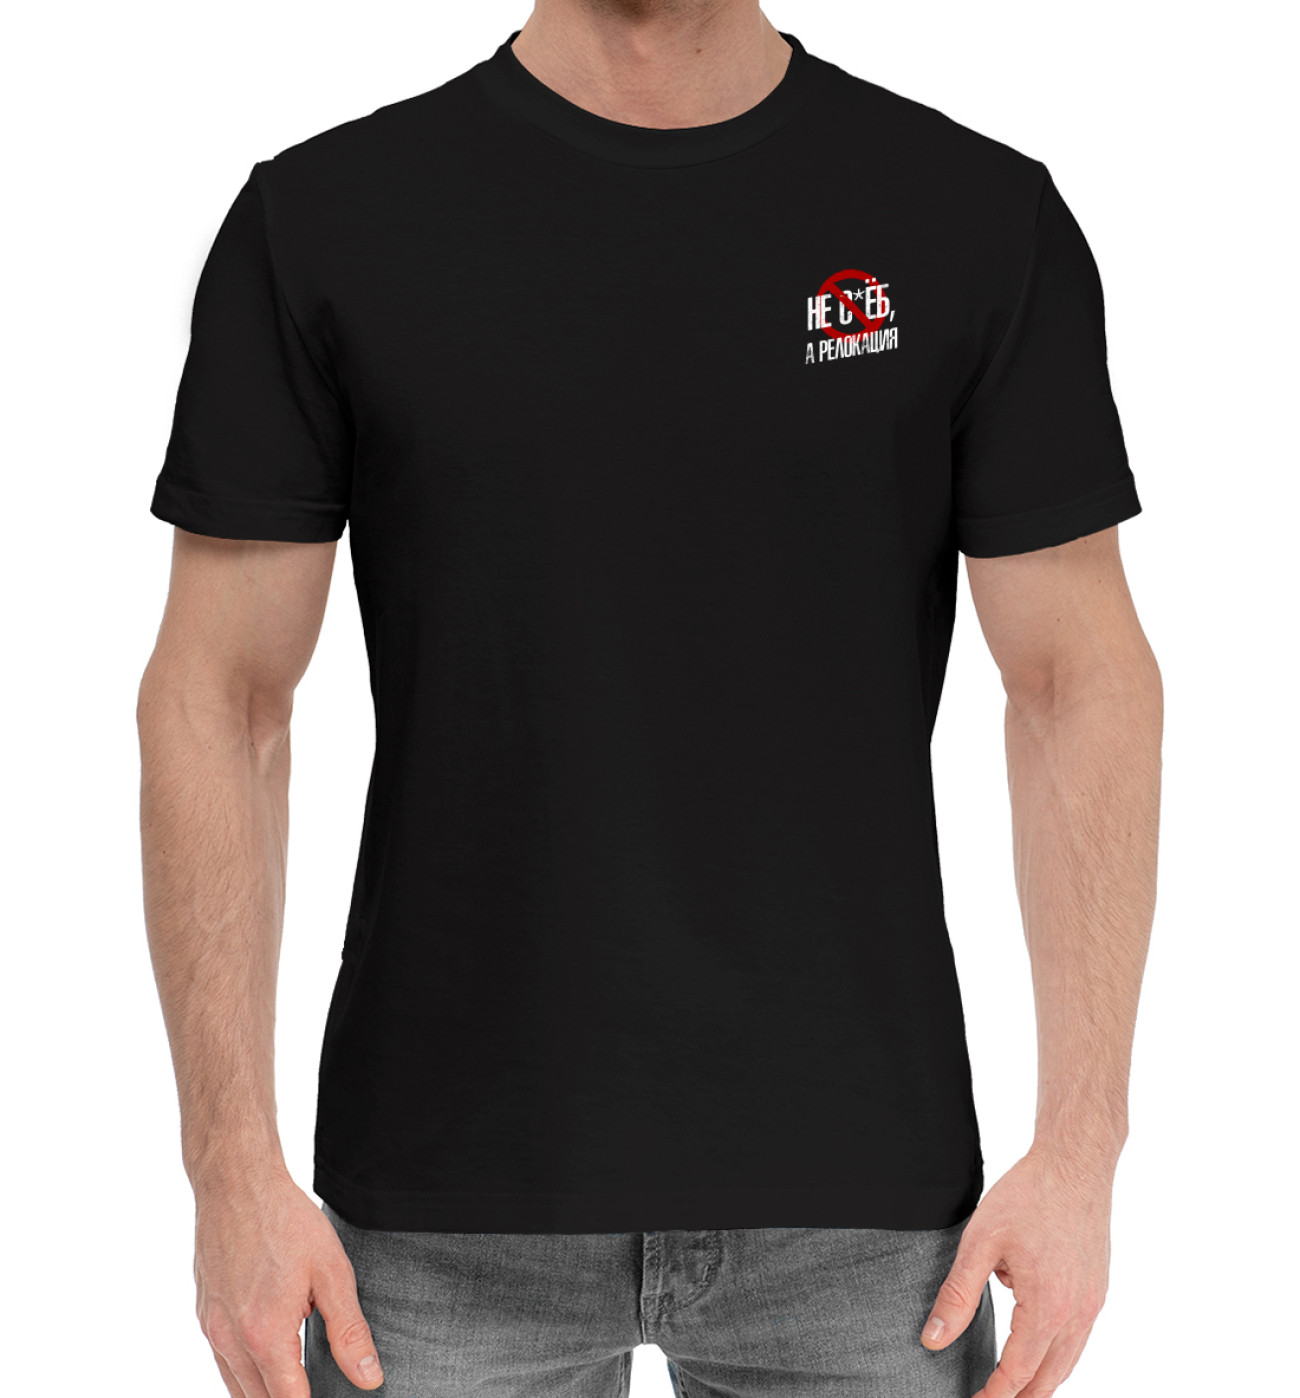 Мужская Хлопковая футболка Не с*ёб, а релокация, артикул: NDP-361936-hfu-2